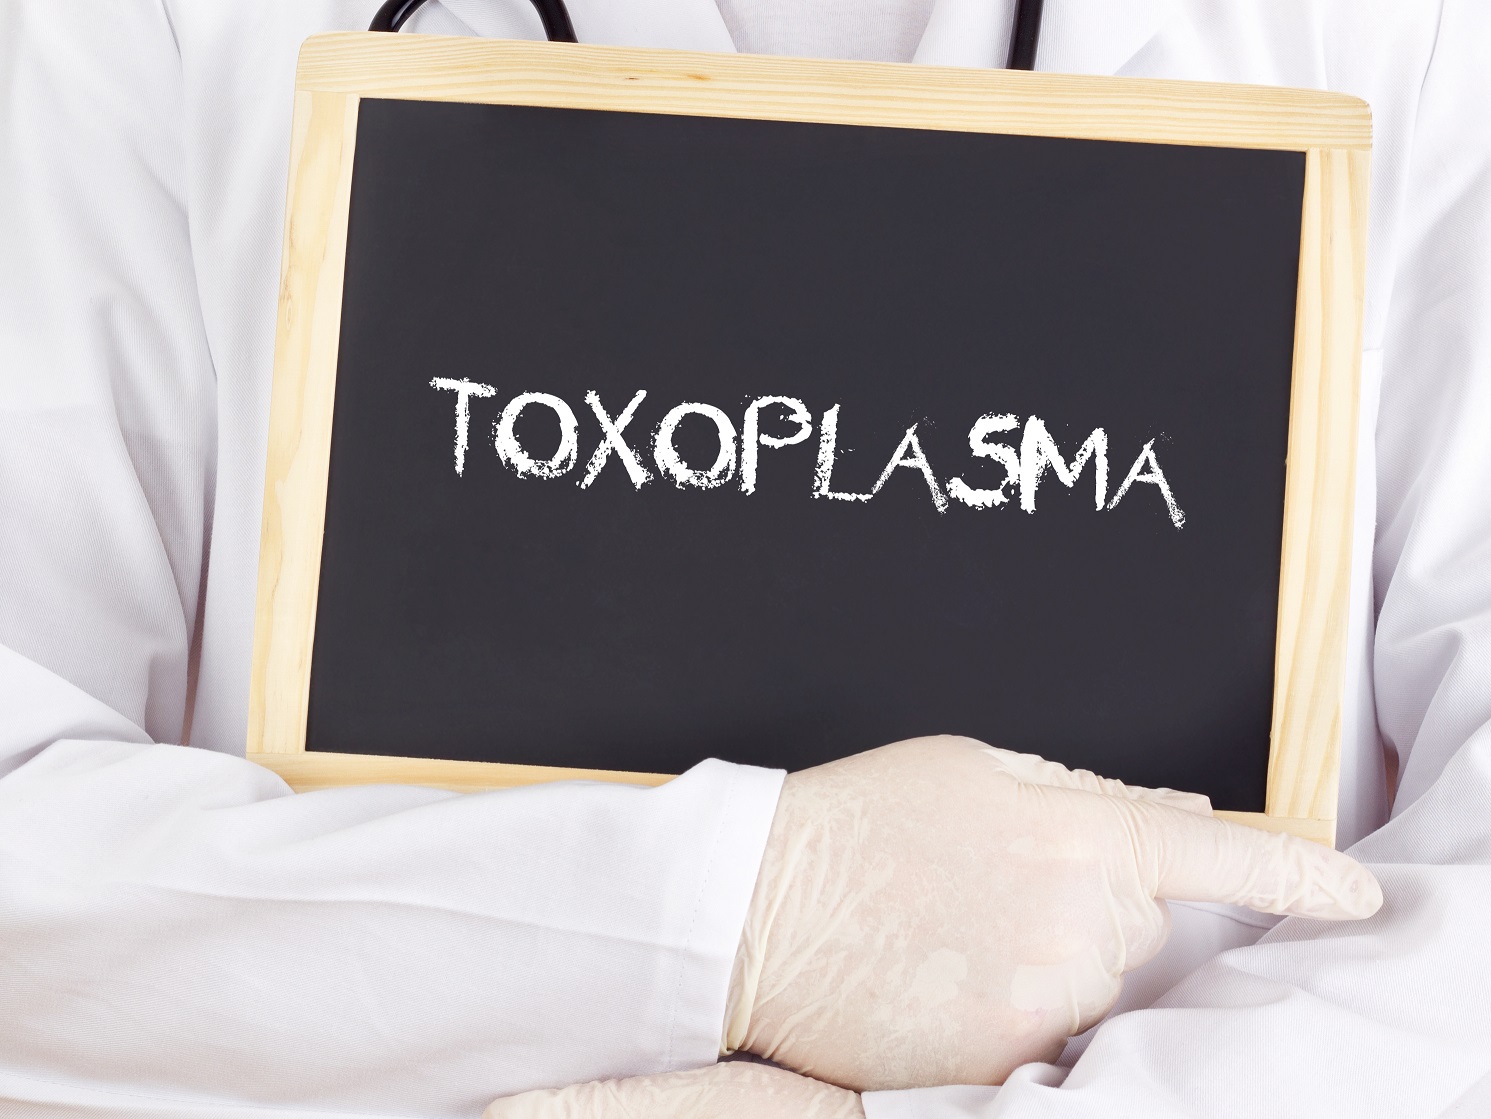 Doctor shows information: Toxoplasma